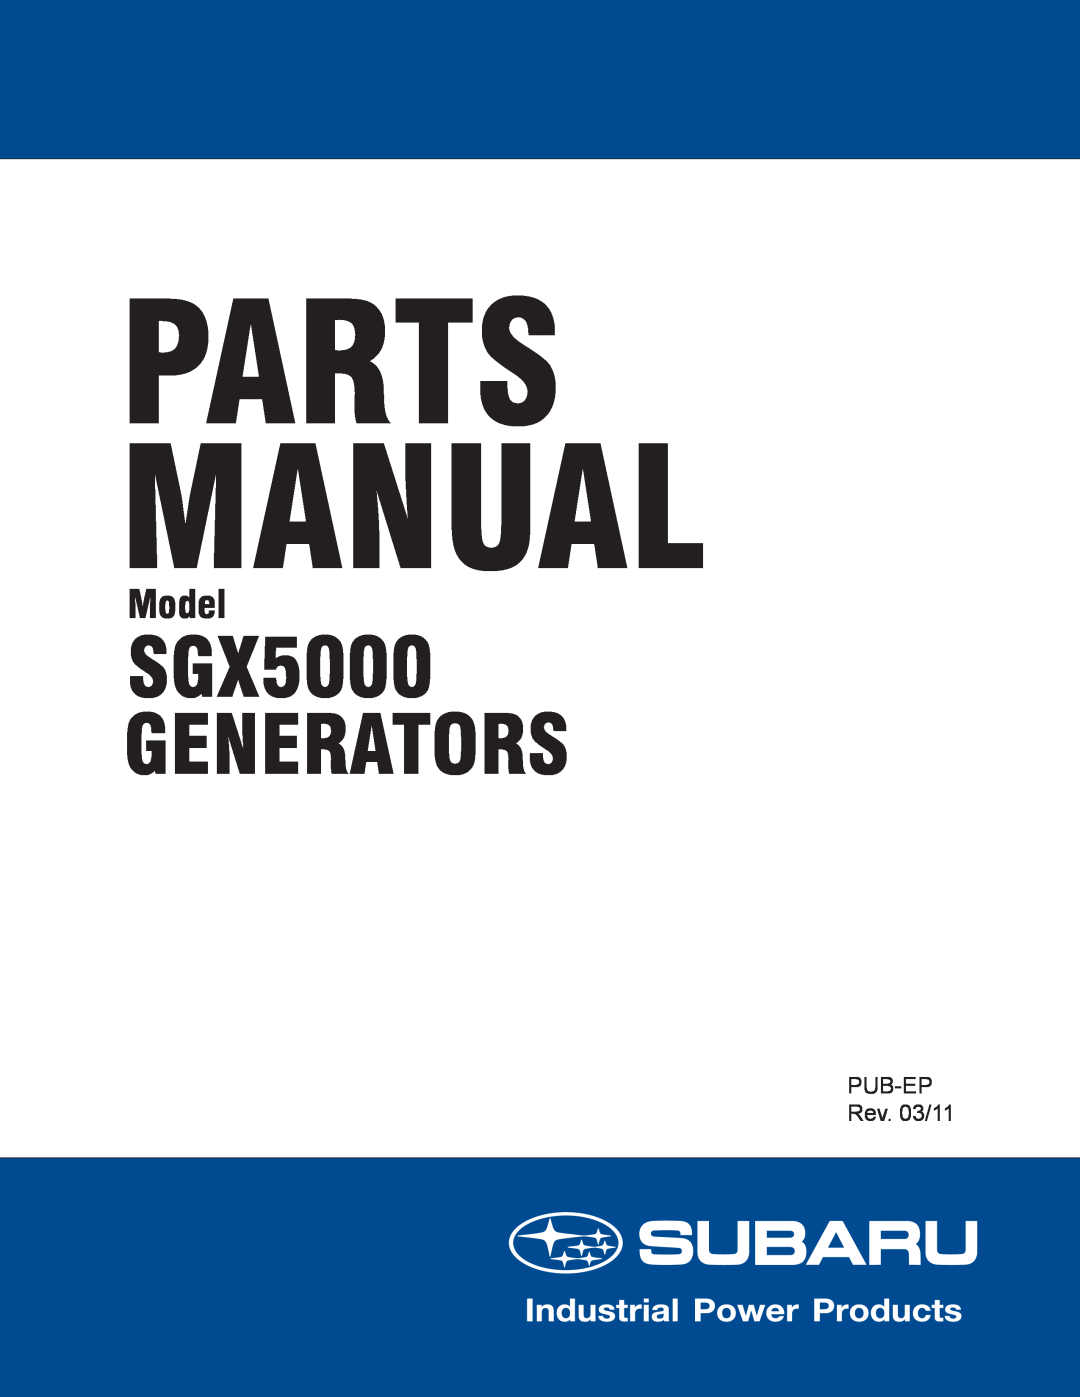 Subaru manual Parts Manual, SGX5000 GENERATORS, Model, PUB-EPRev. 03/11 